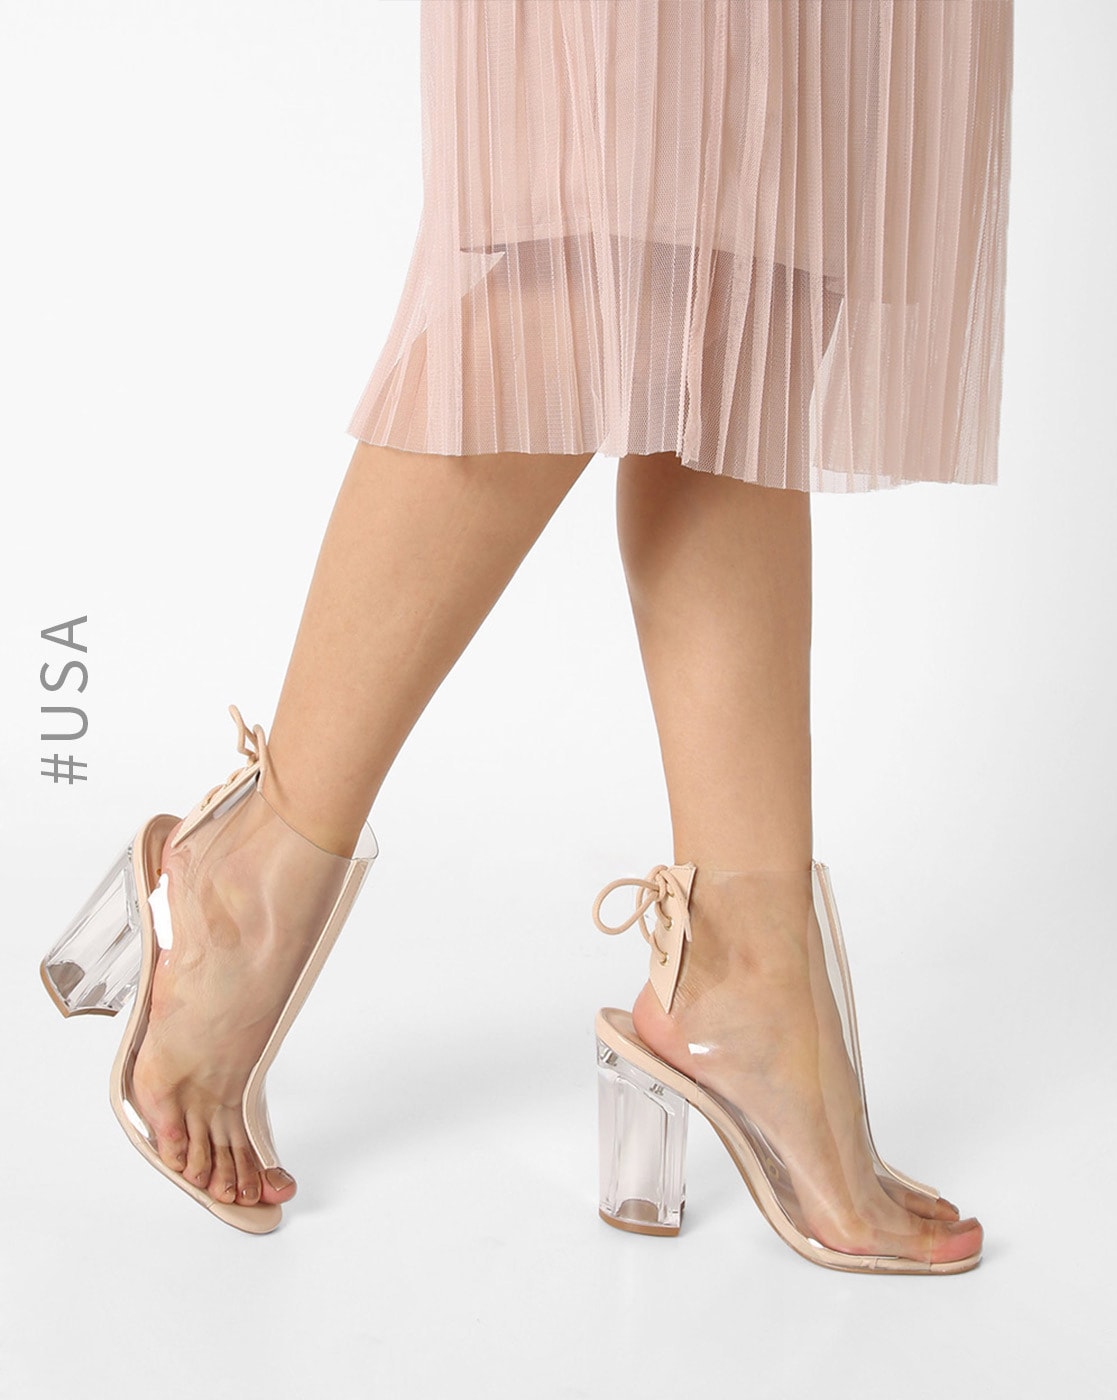 transparent heels for women